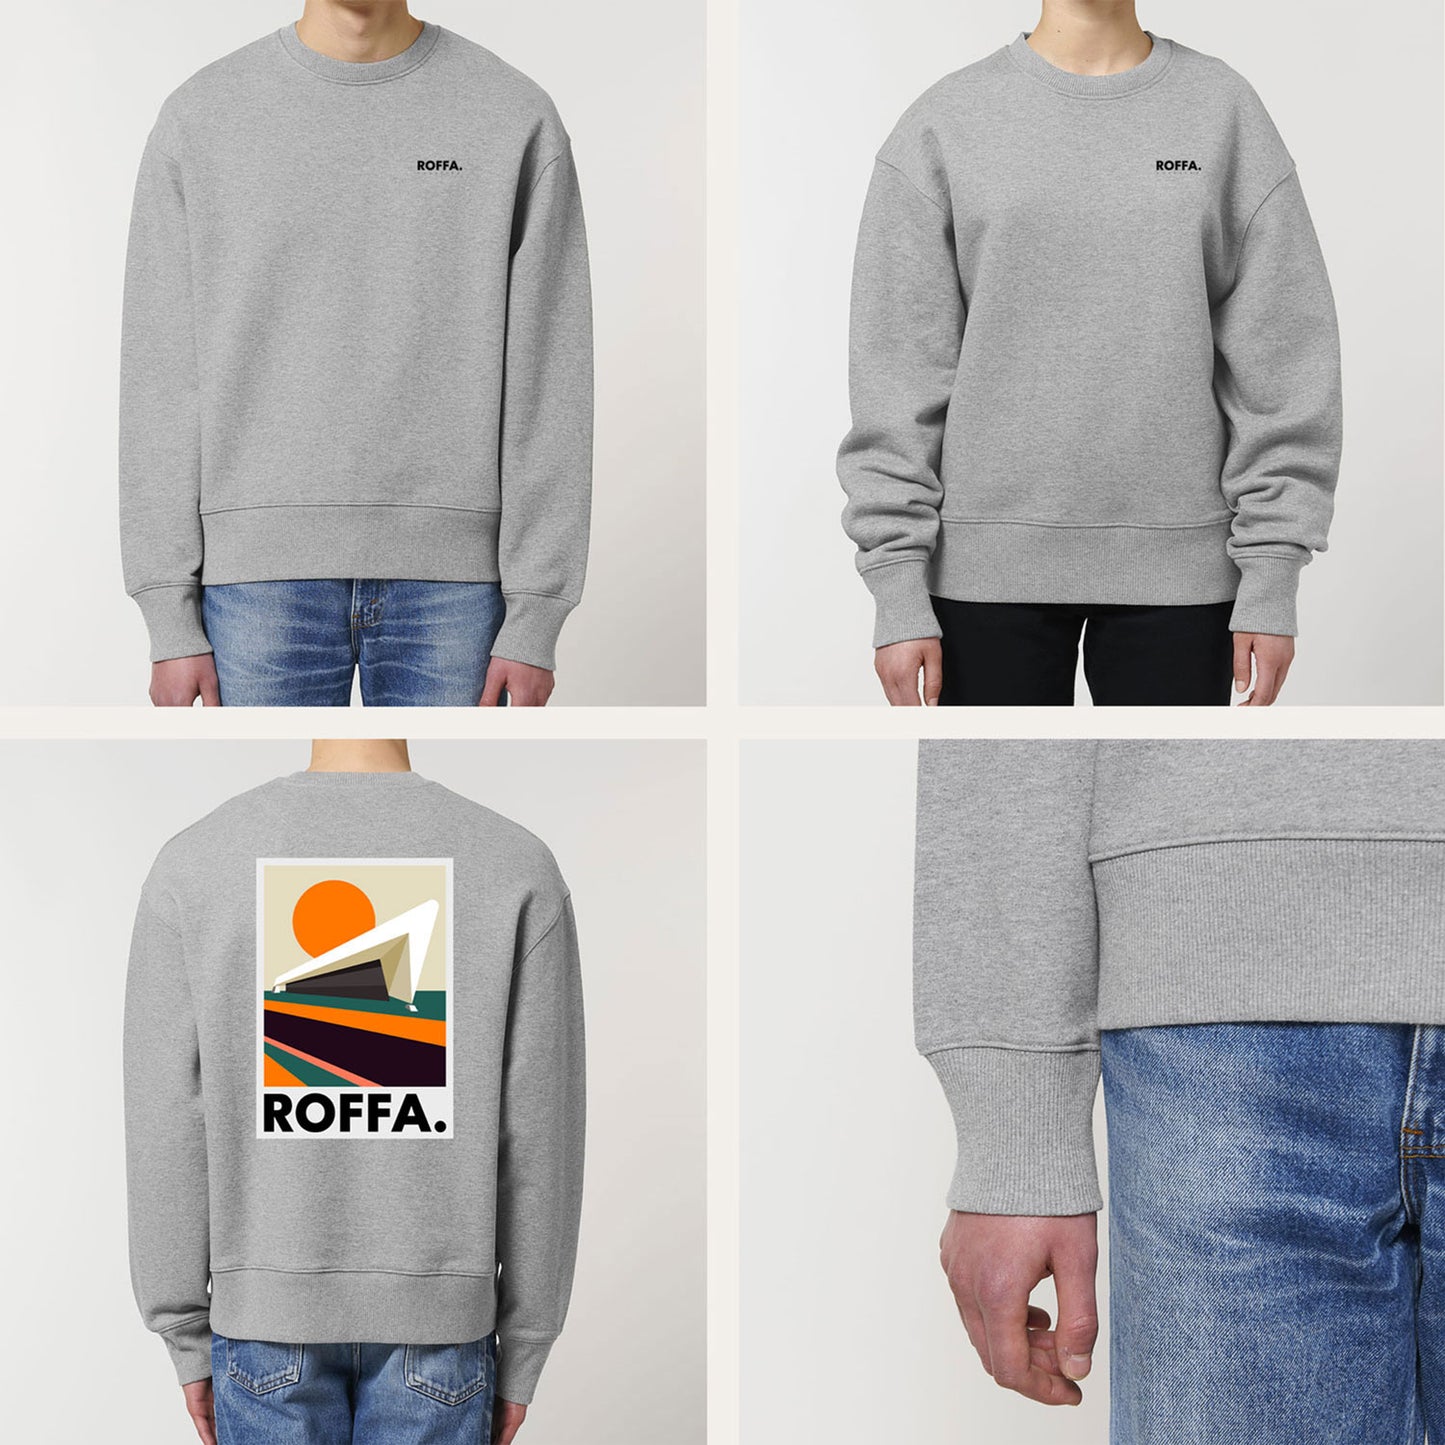 ROFFA. heavy sweater oversized - de Kapsalon - 100% organisch katoen